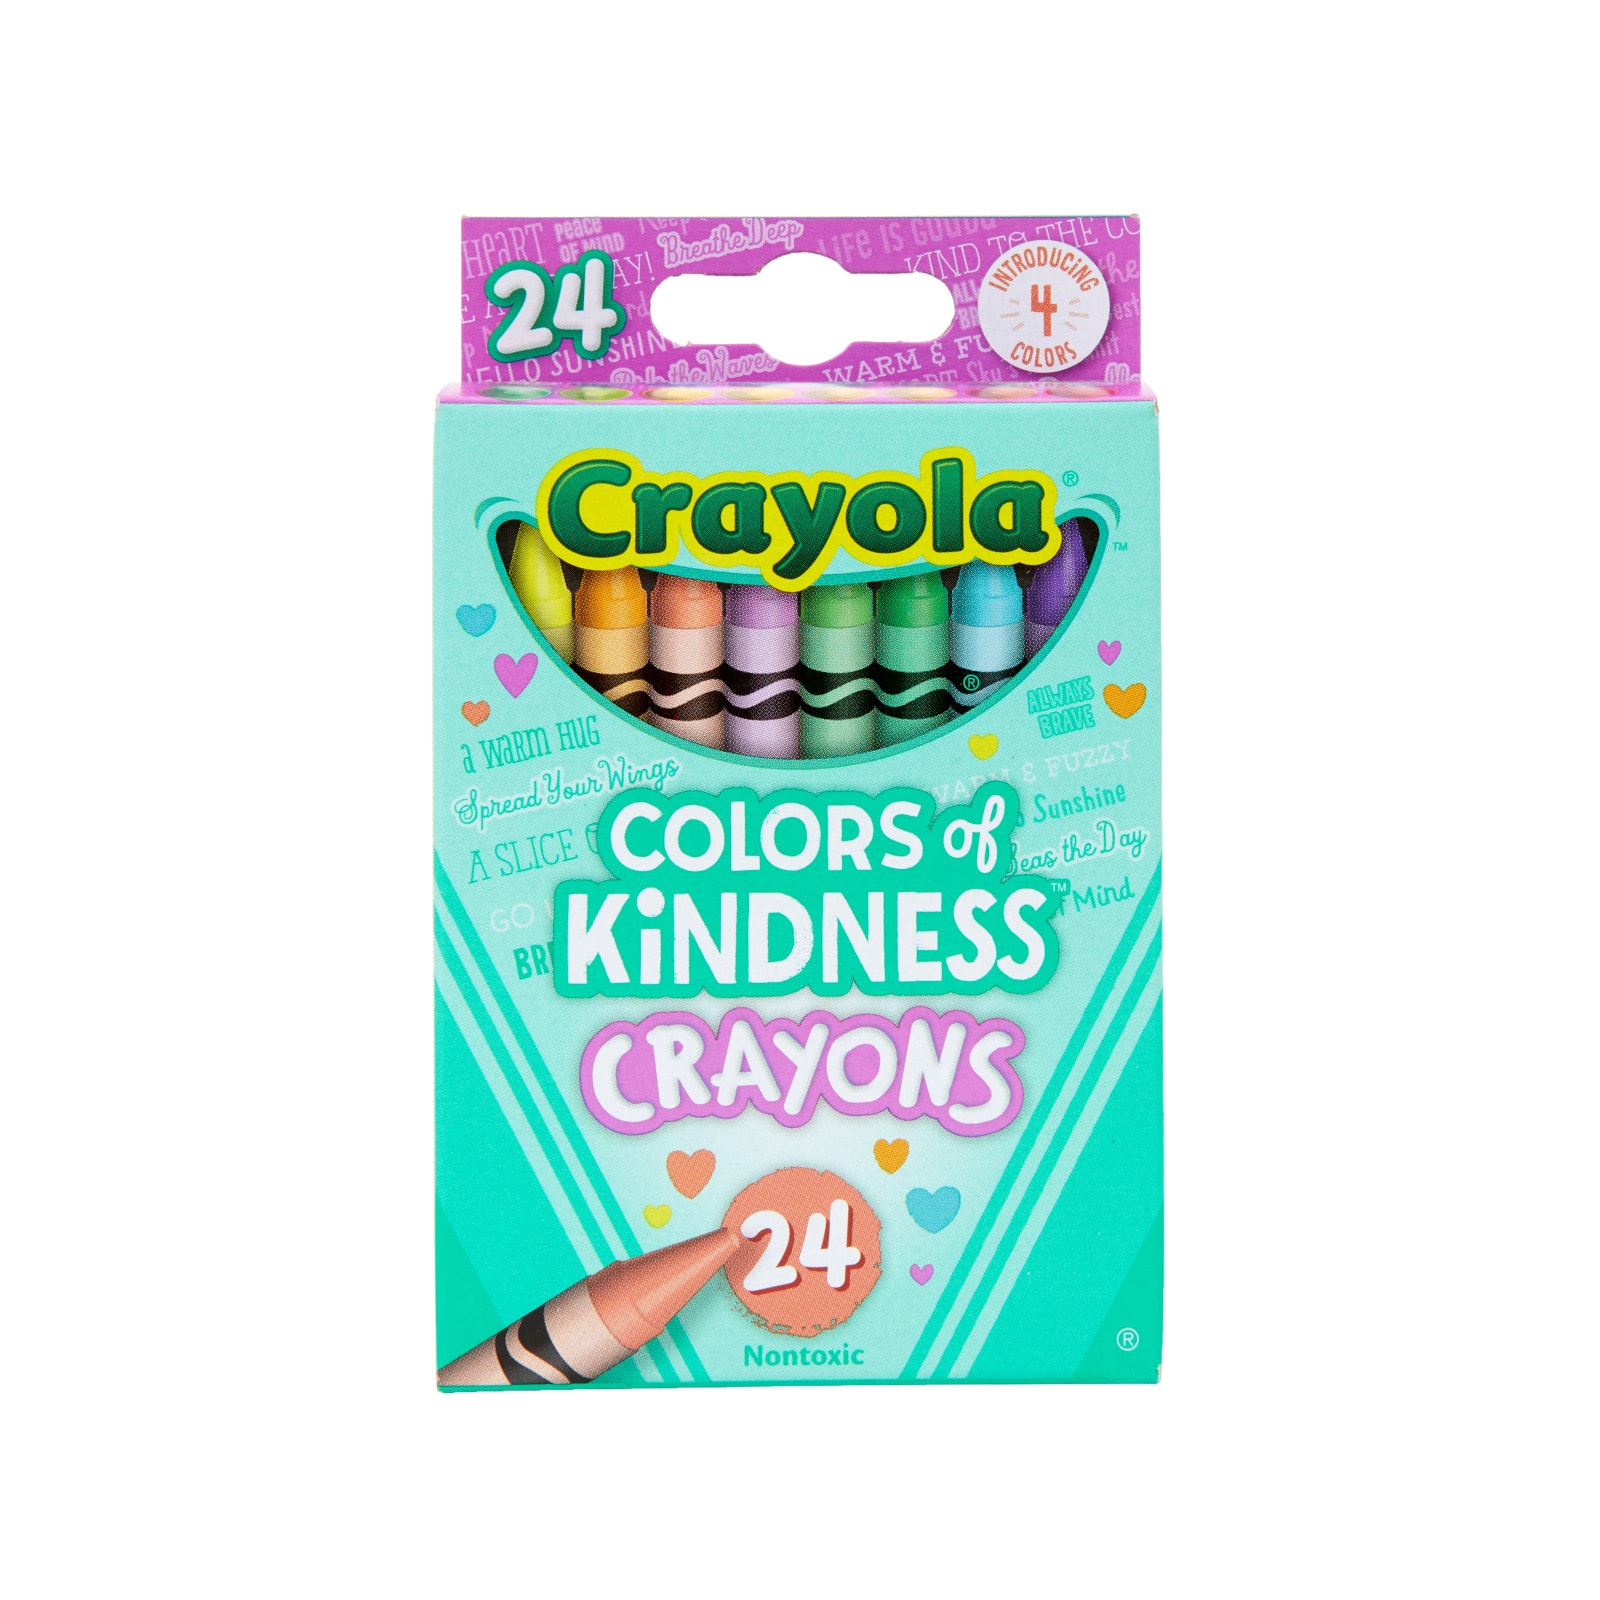 The White Crayons – megsandmonkeys